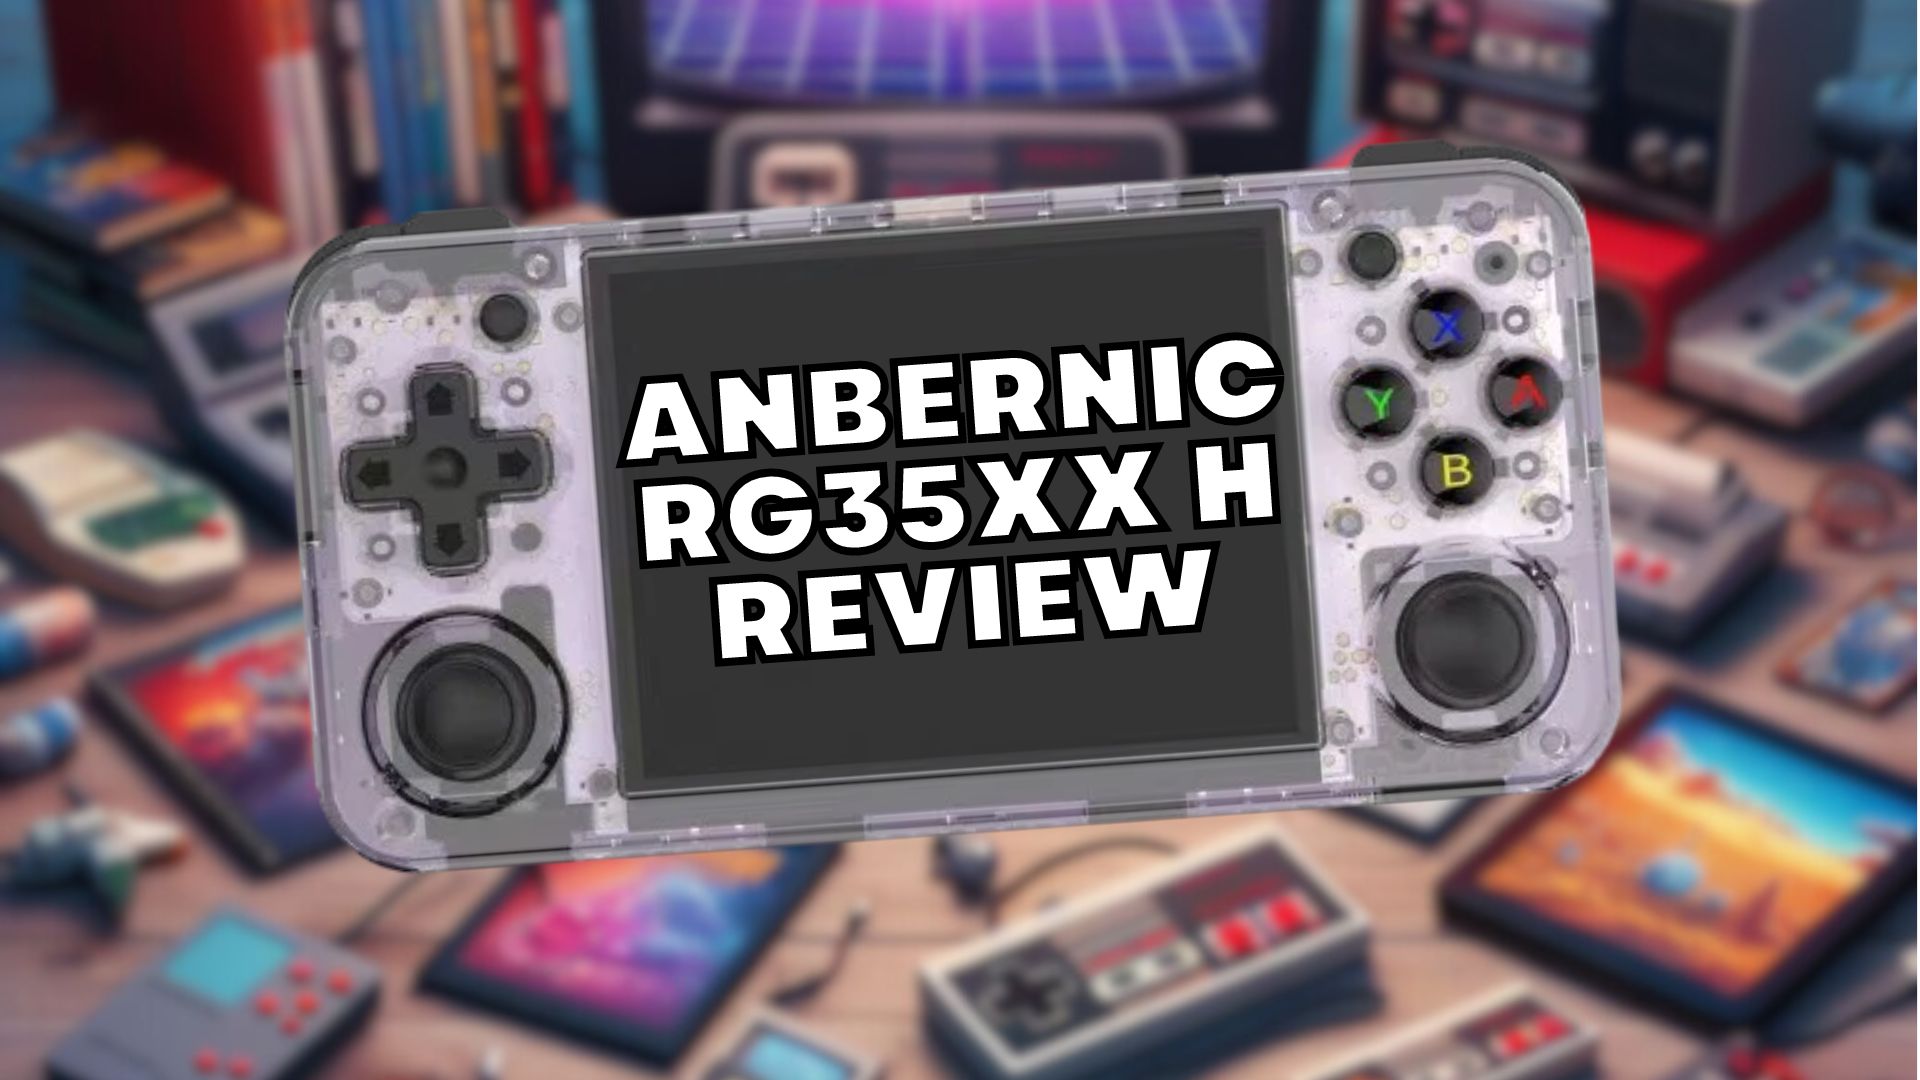 Anbernic RG35XX H Test - Großartiger preiswerter Retro-Gaming-Handheld